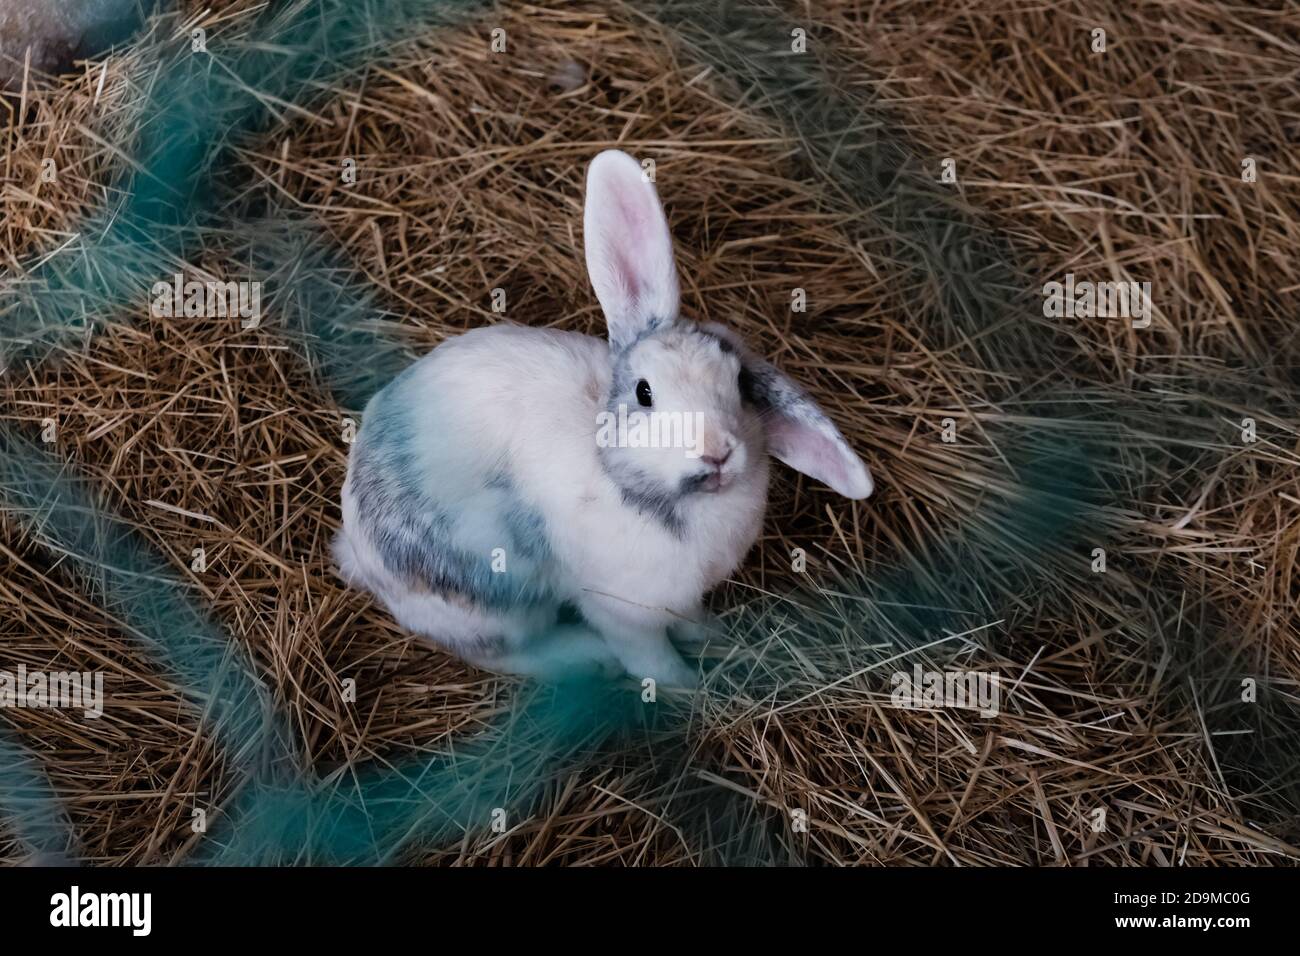 Rabbit Fo Fotos e Imágenes de stock - Alamy